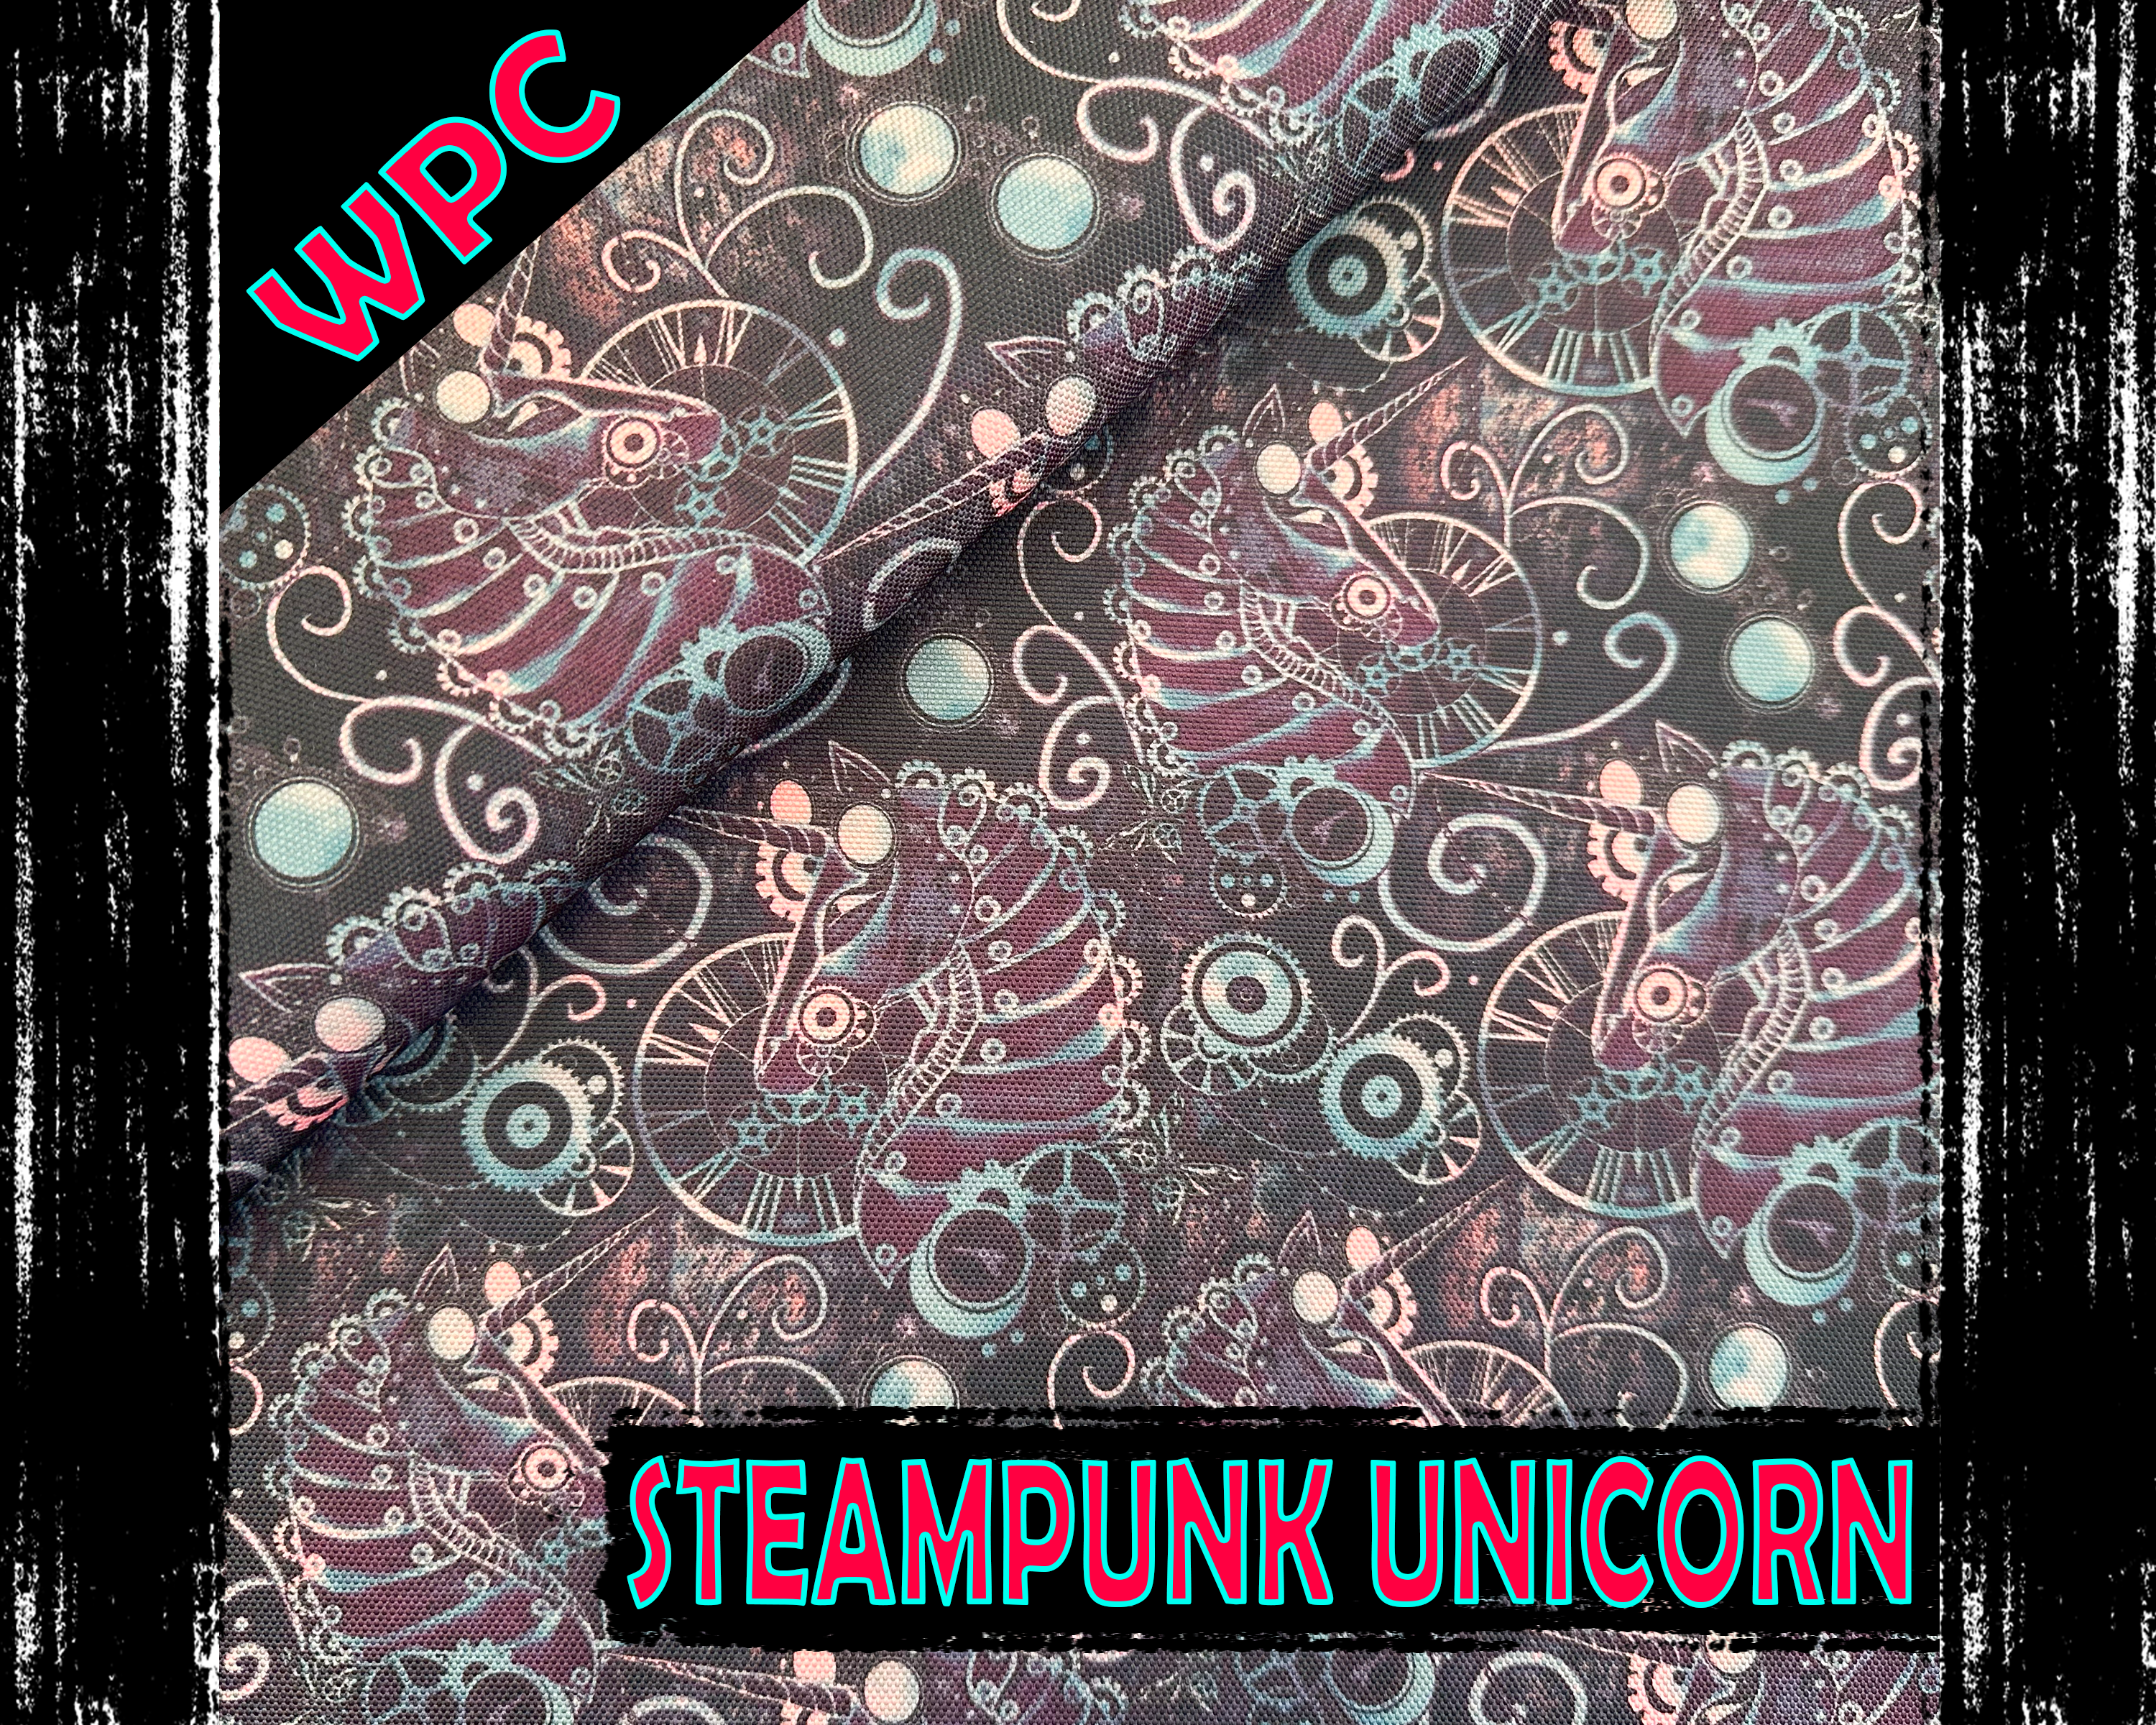 Steampunk Unicorn, Waterproof Polyester Canvas